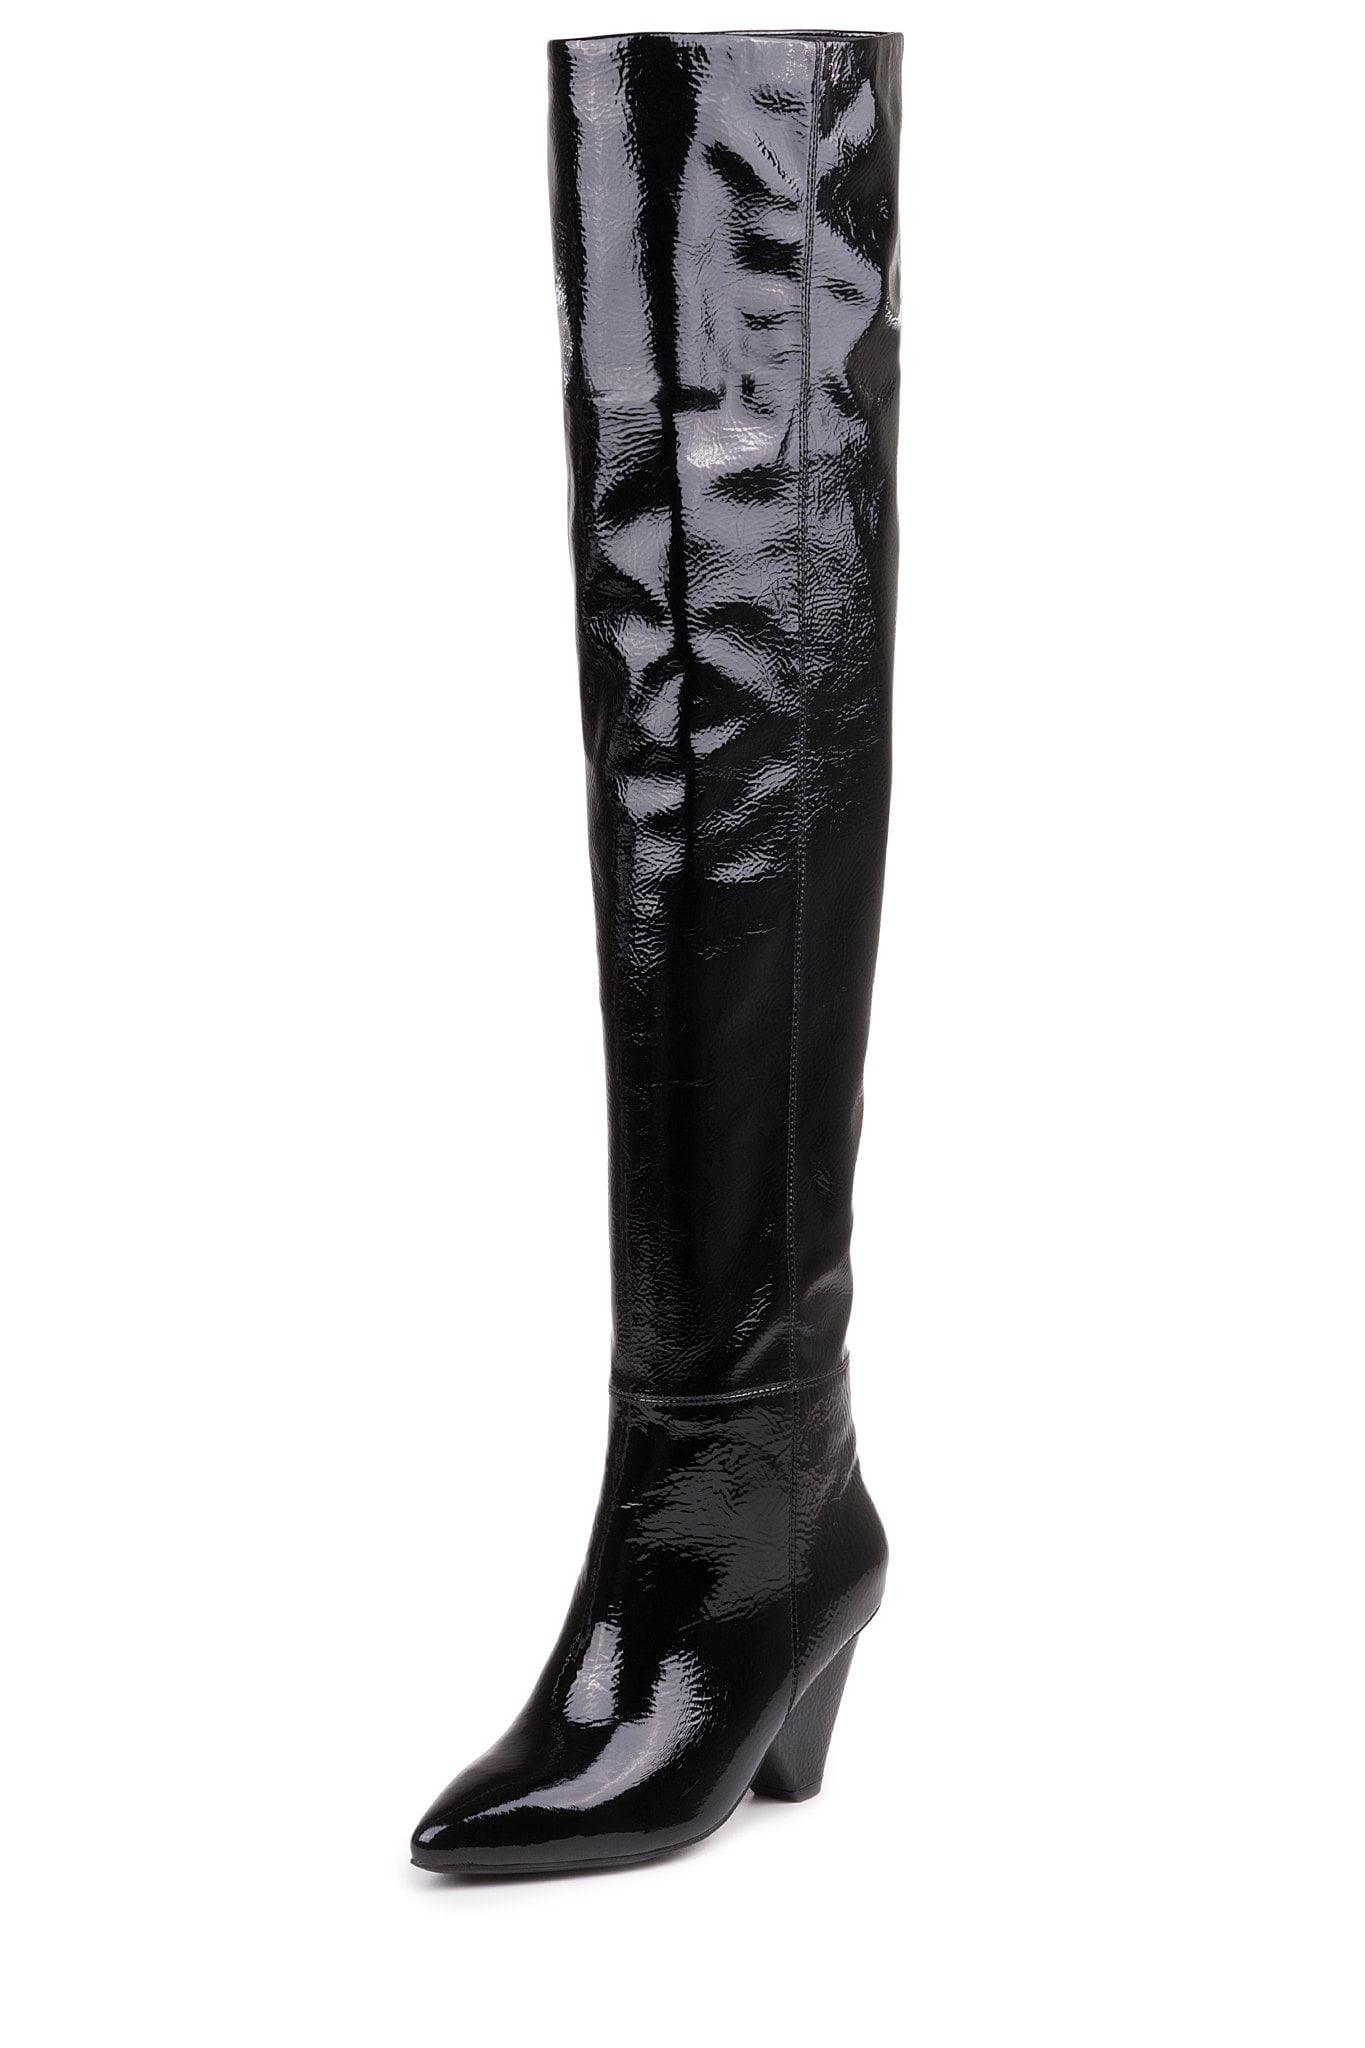 black dress boots knee high